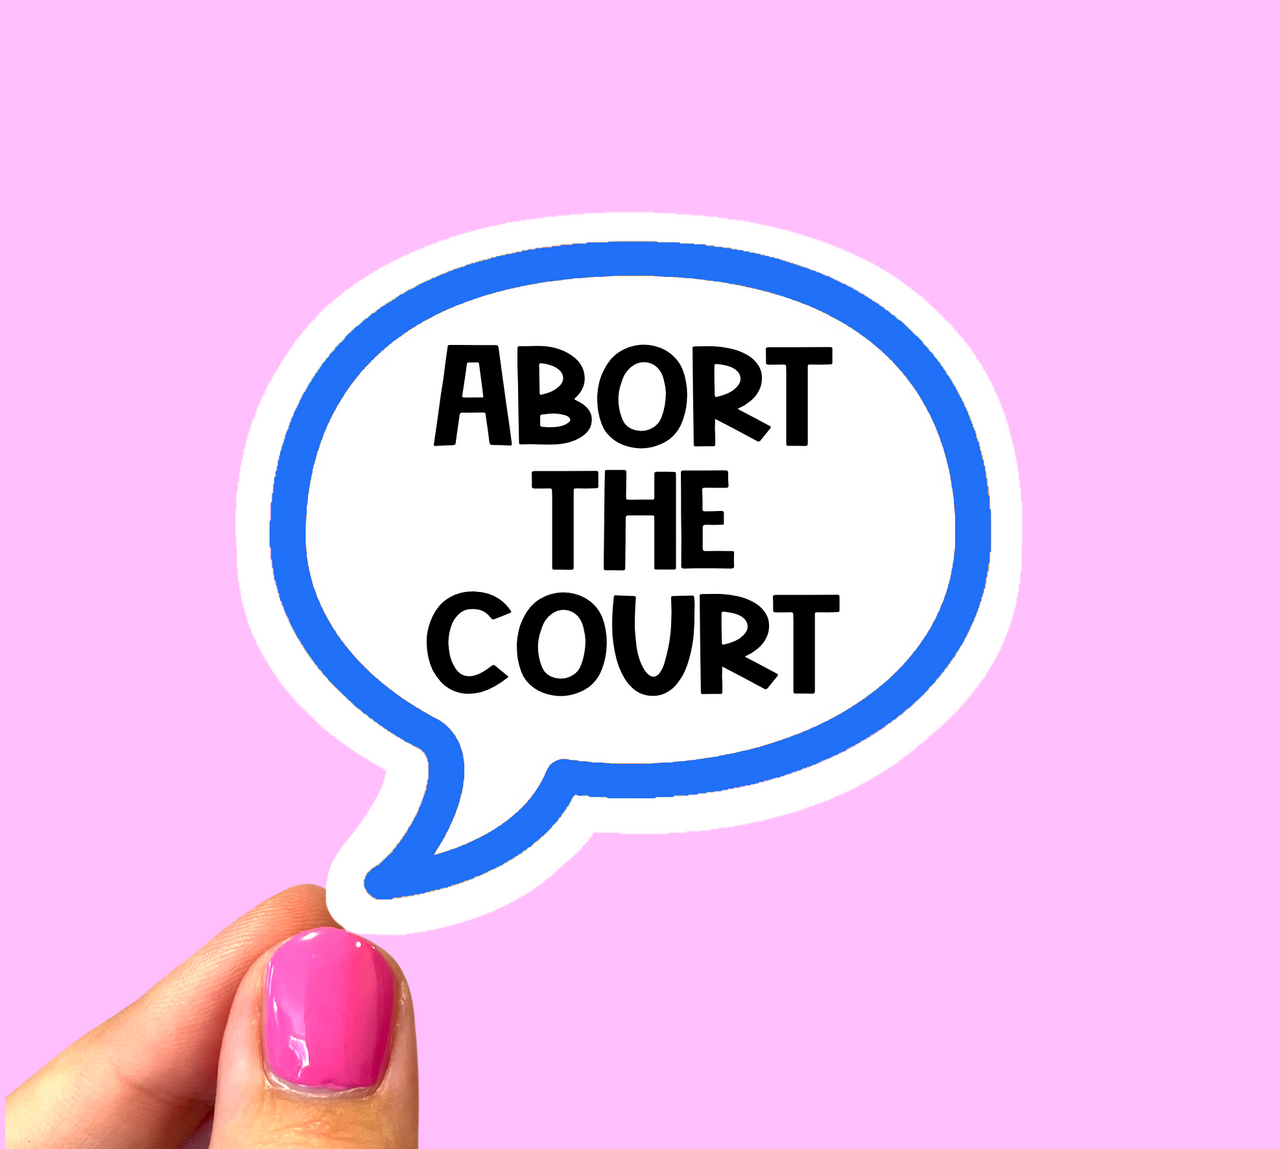 Abort the court